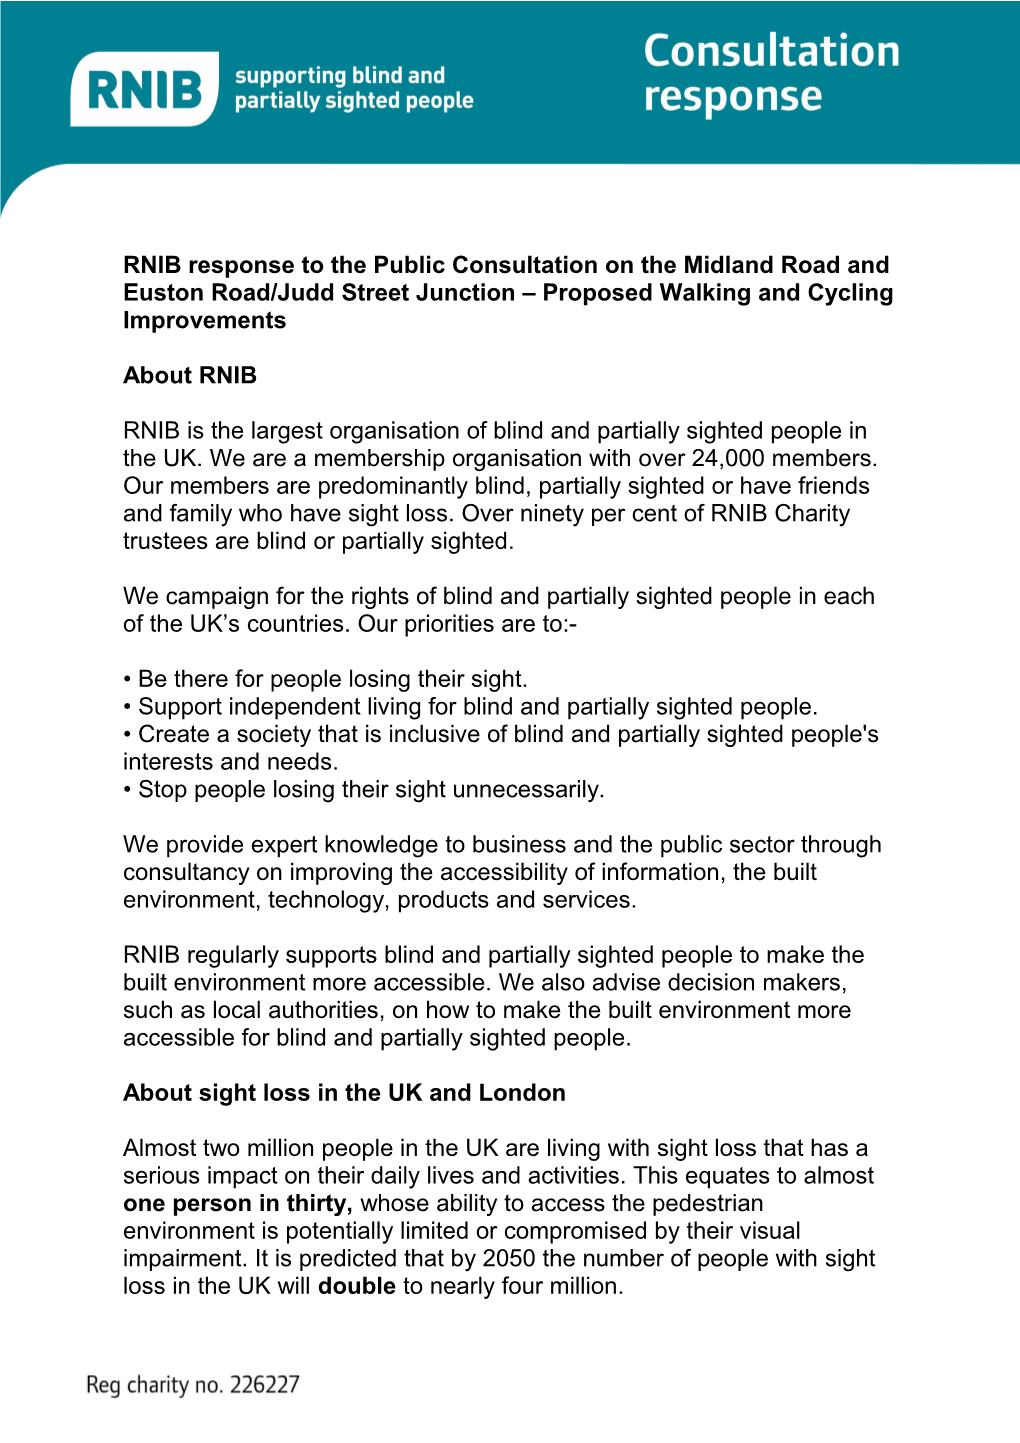 RNIB Response to the Public Consultation on the Midland Road and Euston Road/Judd Street